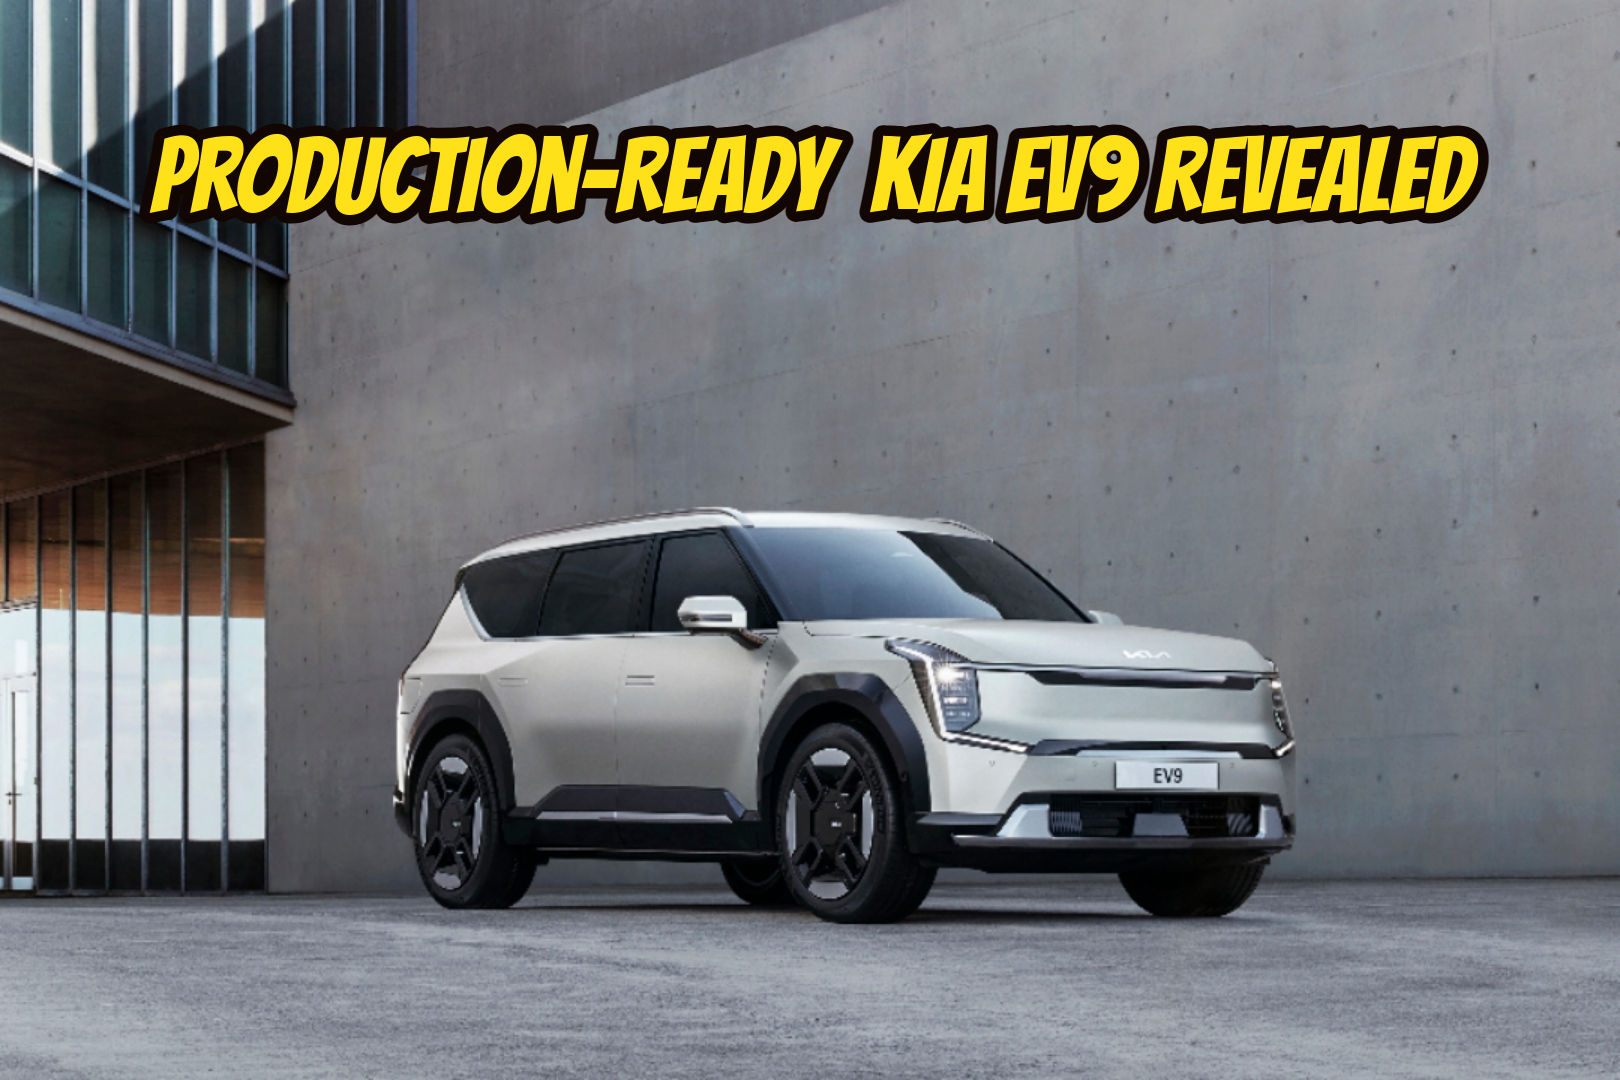 Production-ready Kia EV9 revealed